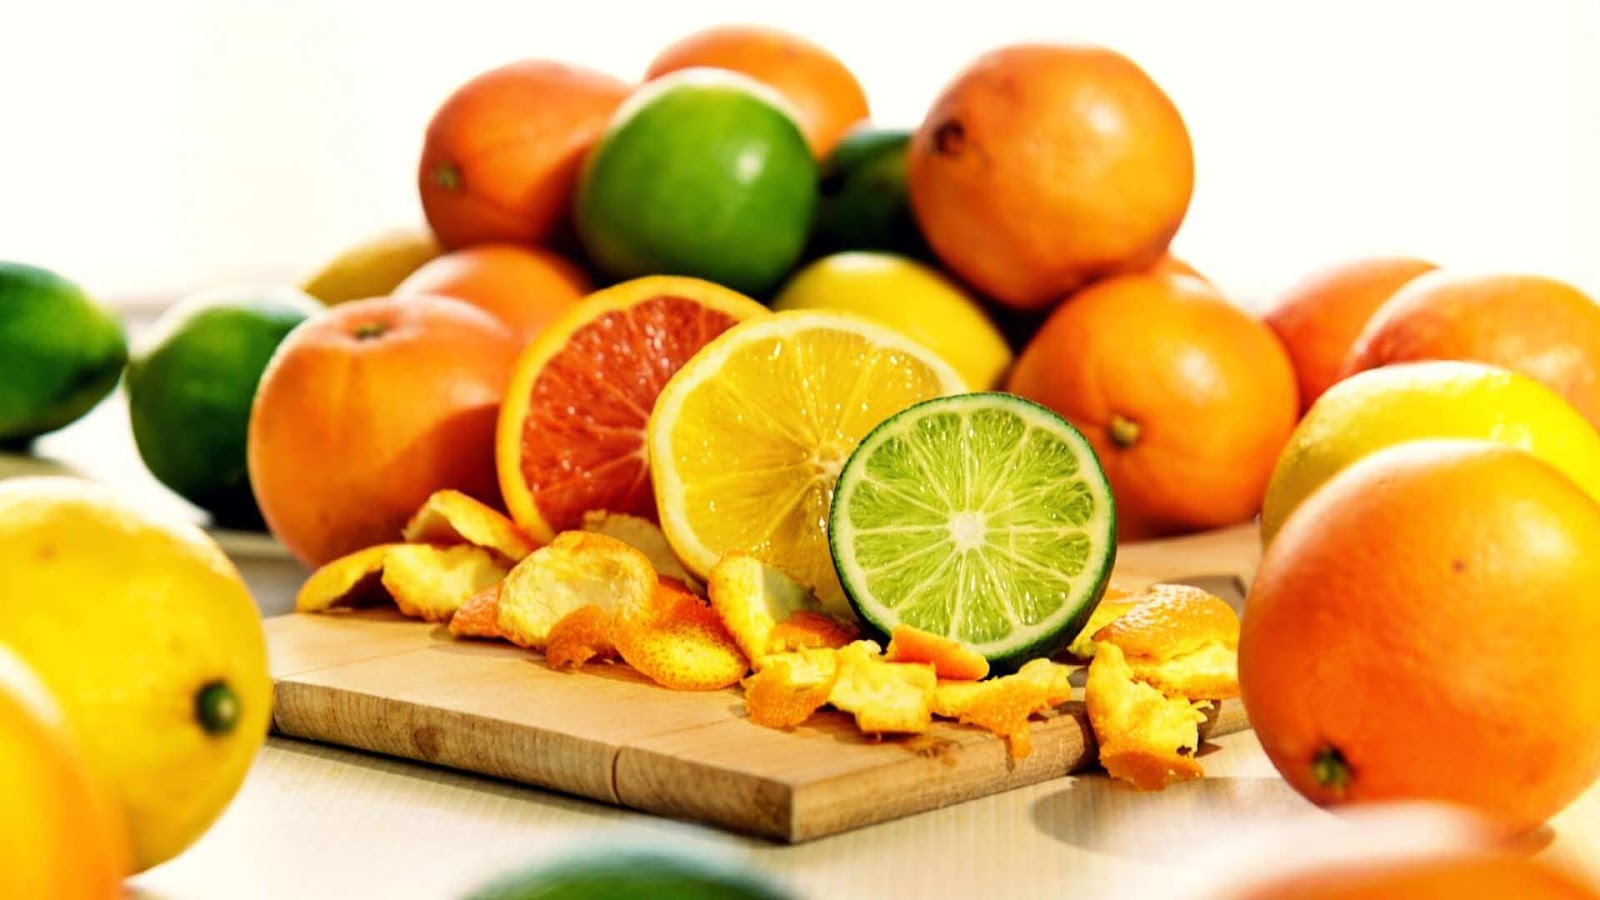 winter season food - citrus fruits